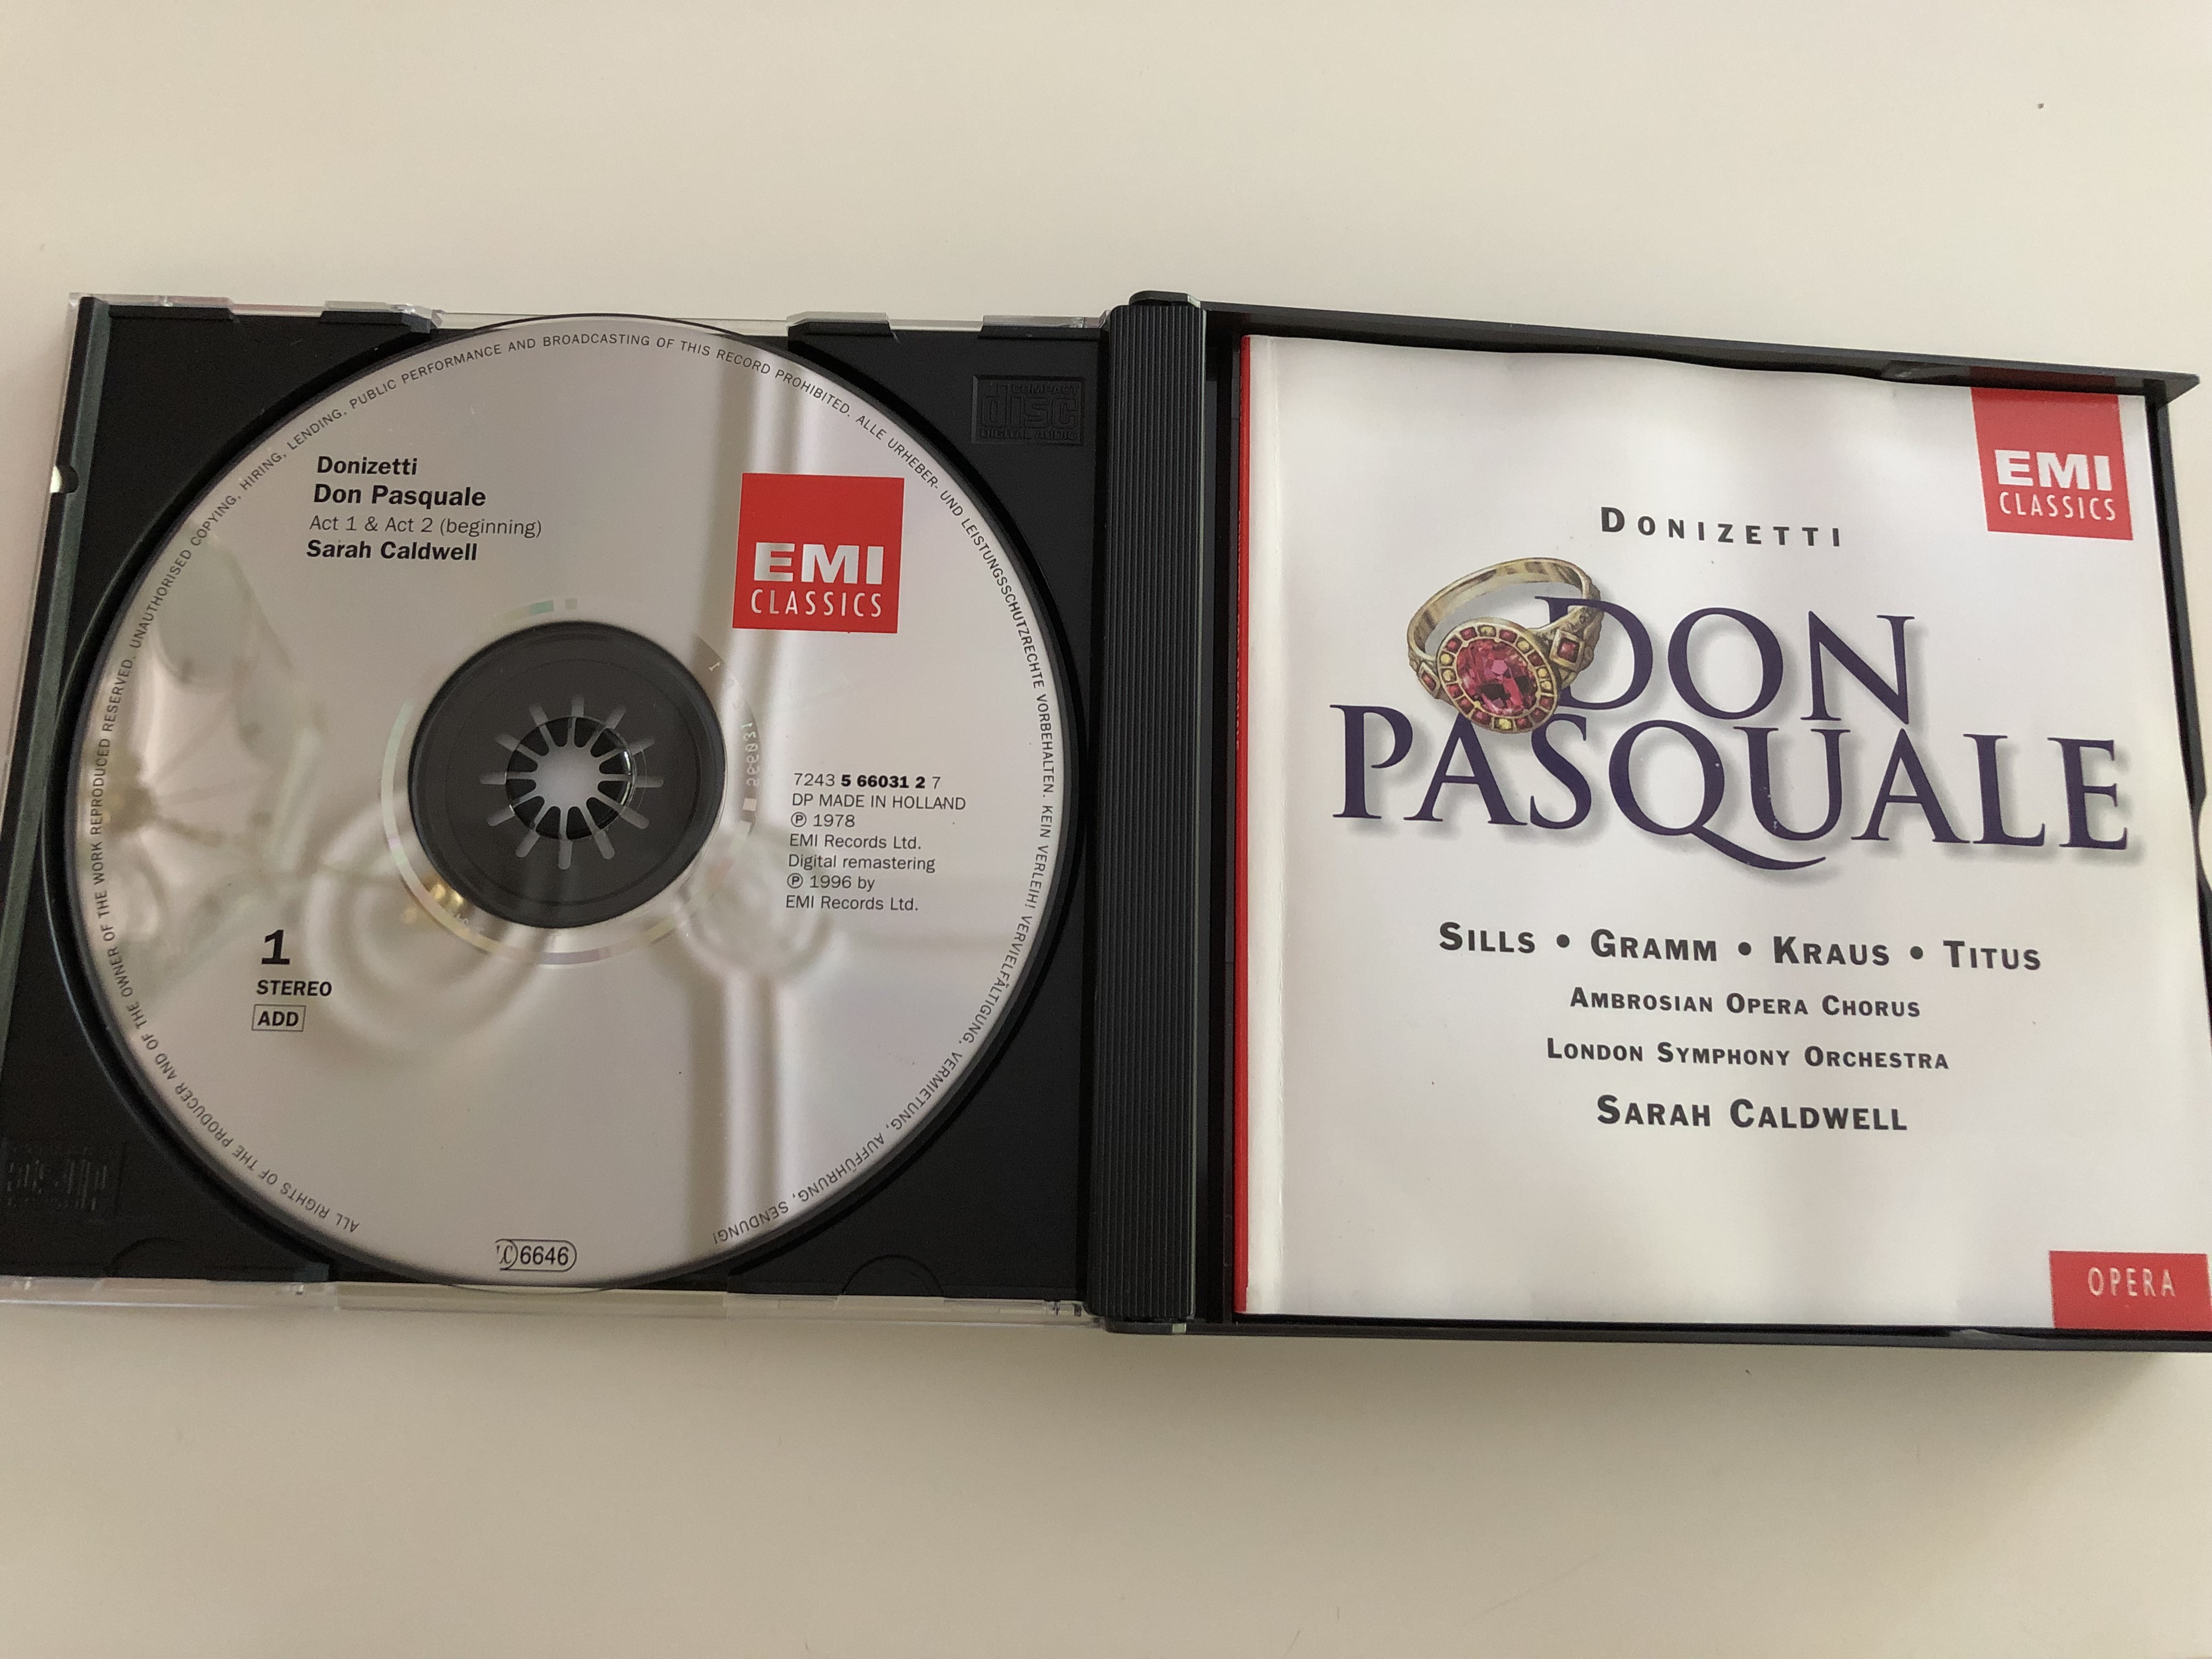 donizetti-don-pasquale-sills-gramm-kraus-titus-ambrosian-opera-chorus-london-symphony-orchestra-sarah-caldwell-emi-classics-2x-audio-cd-1996-2cd-2-.jpg